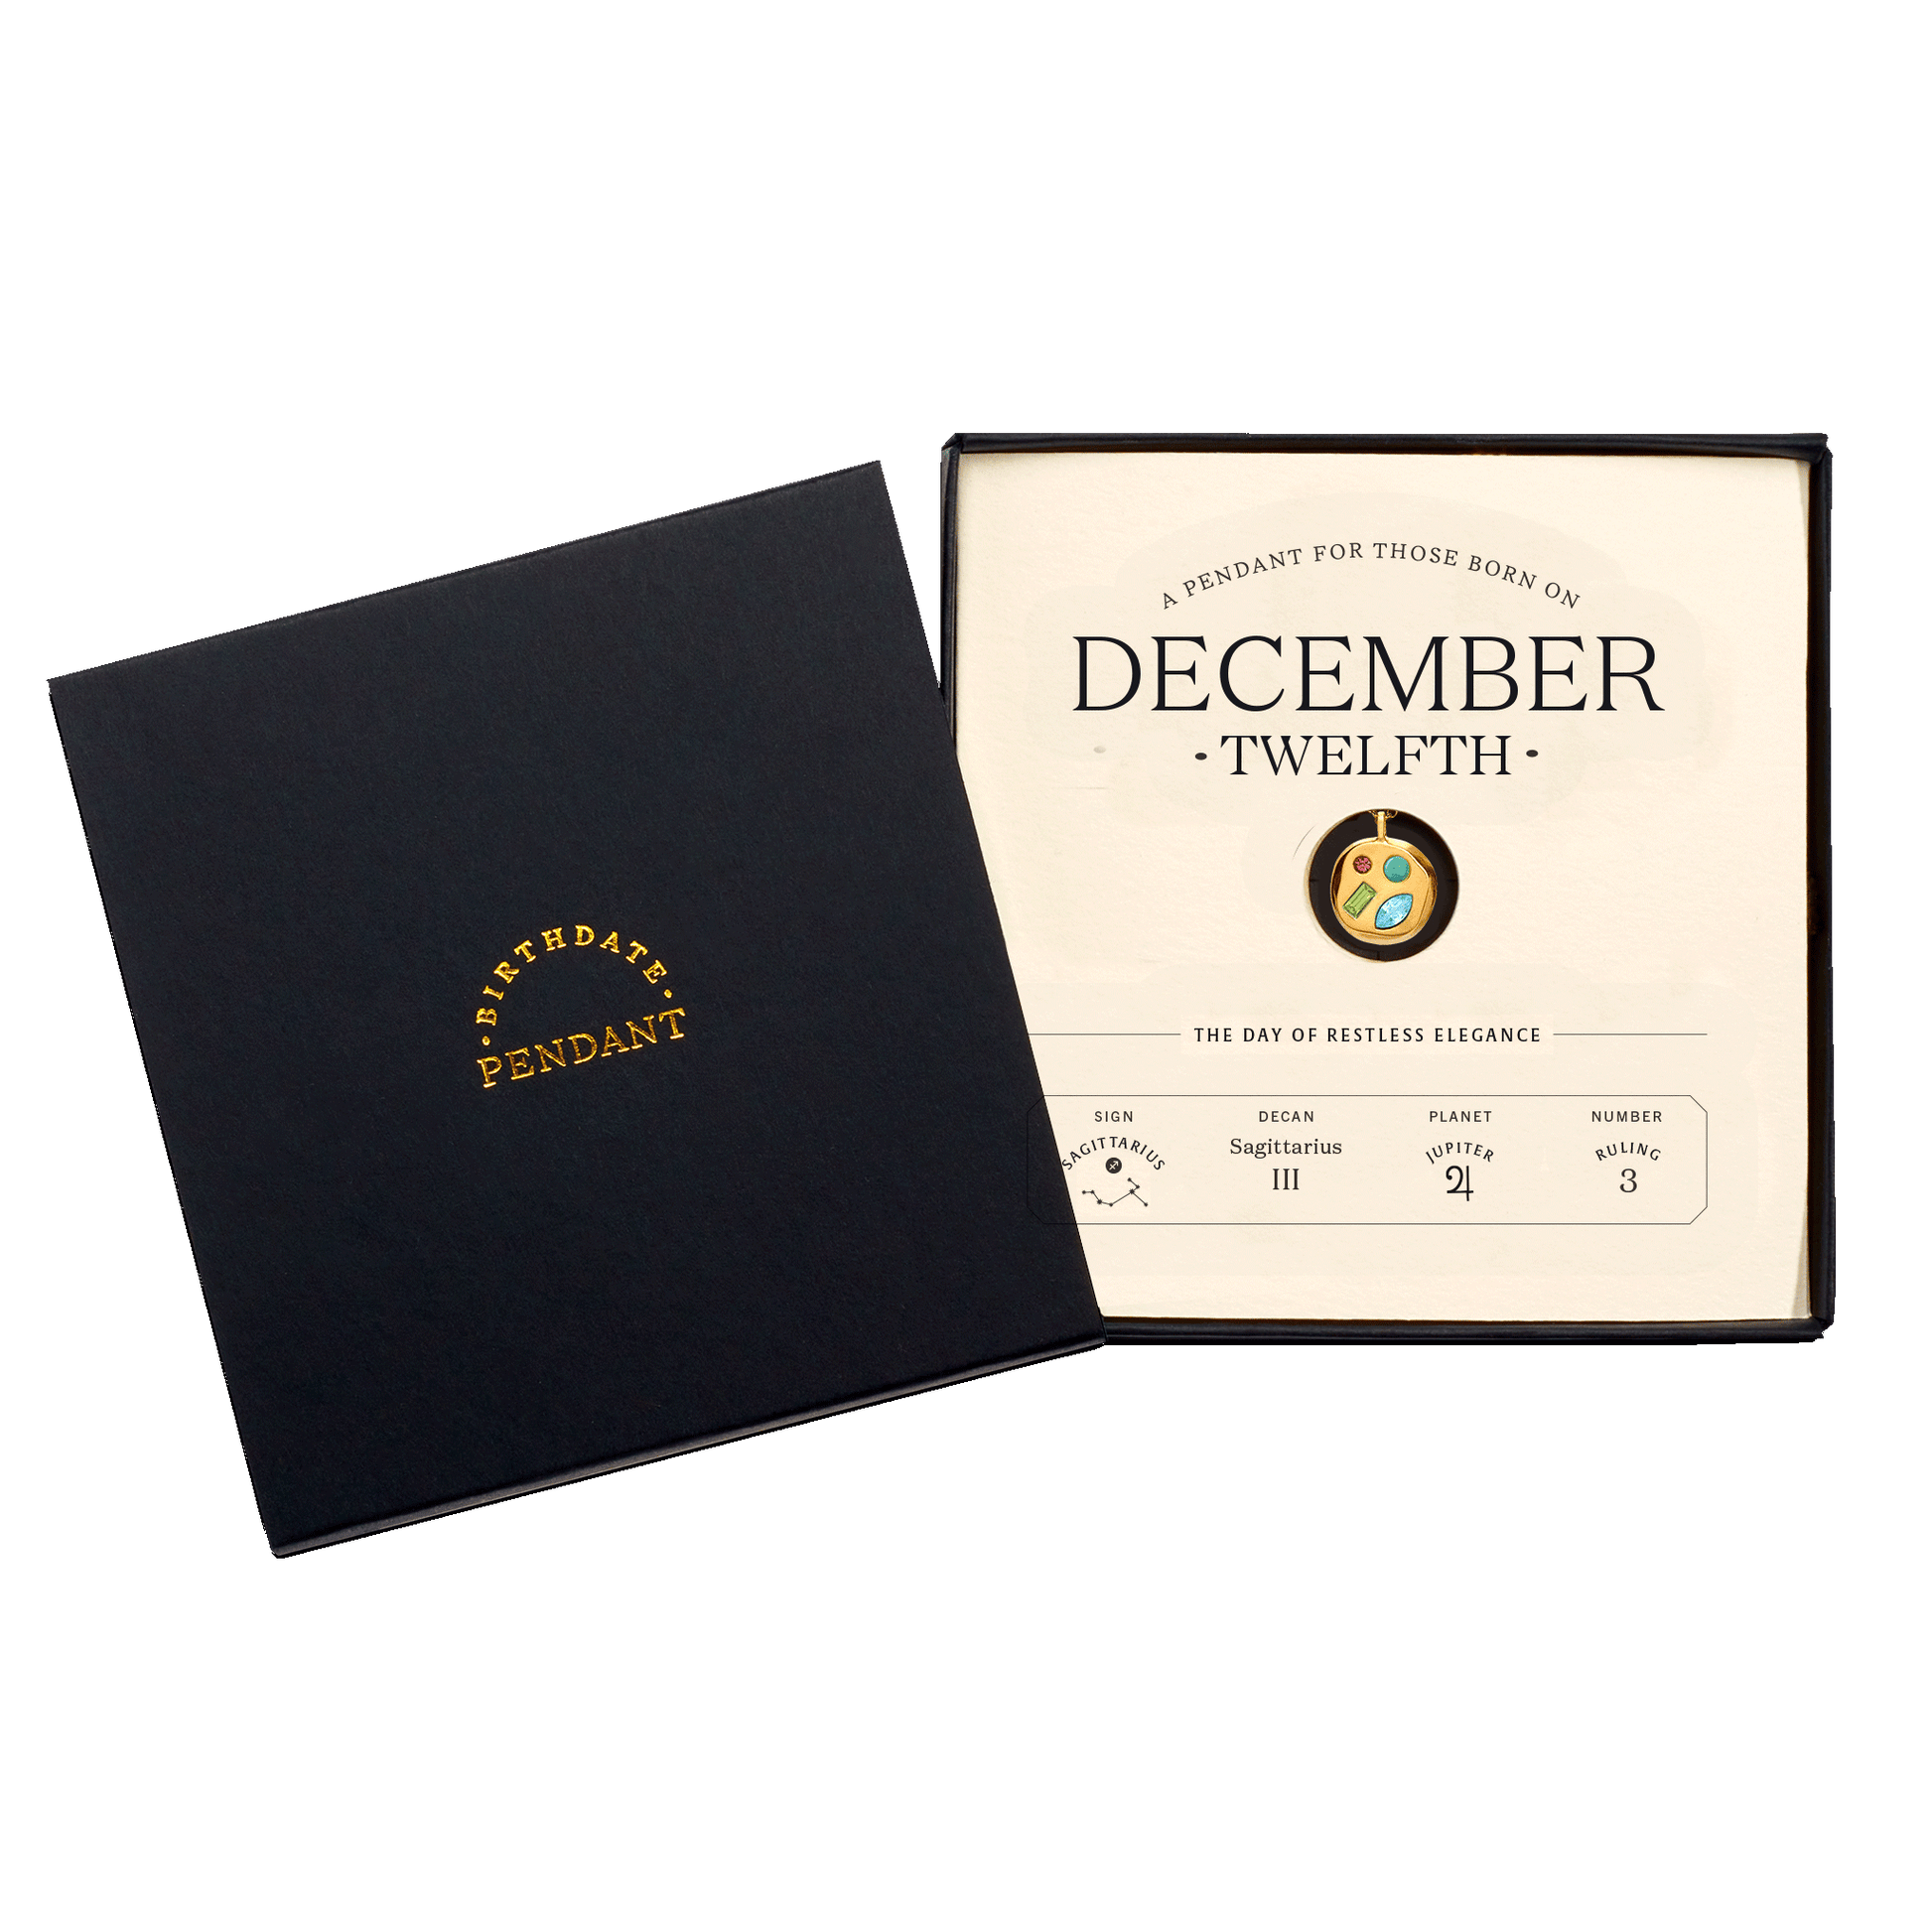 The December Twelfth Pendant inside its box